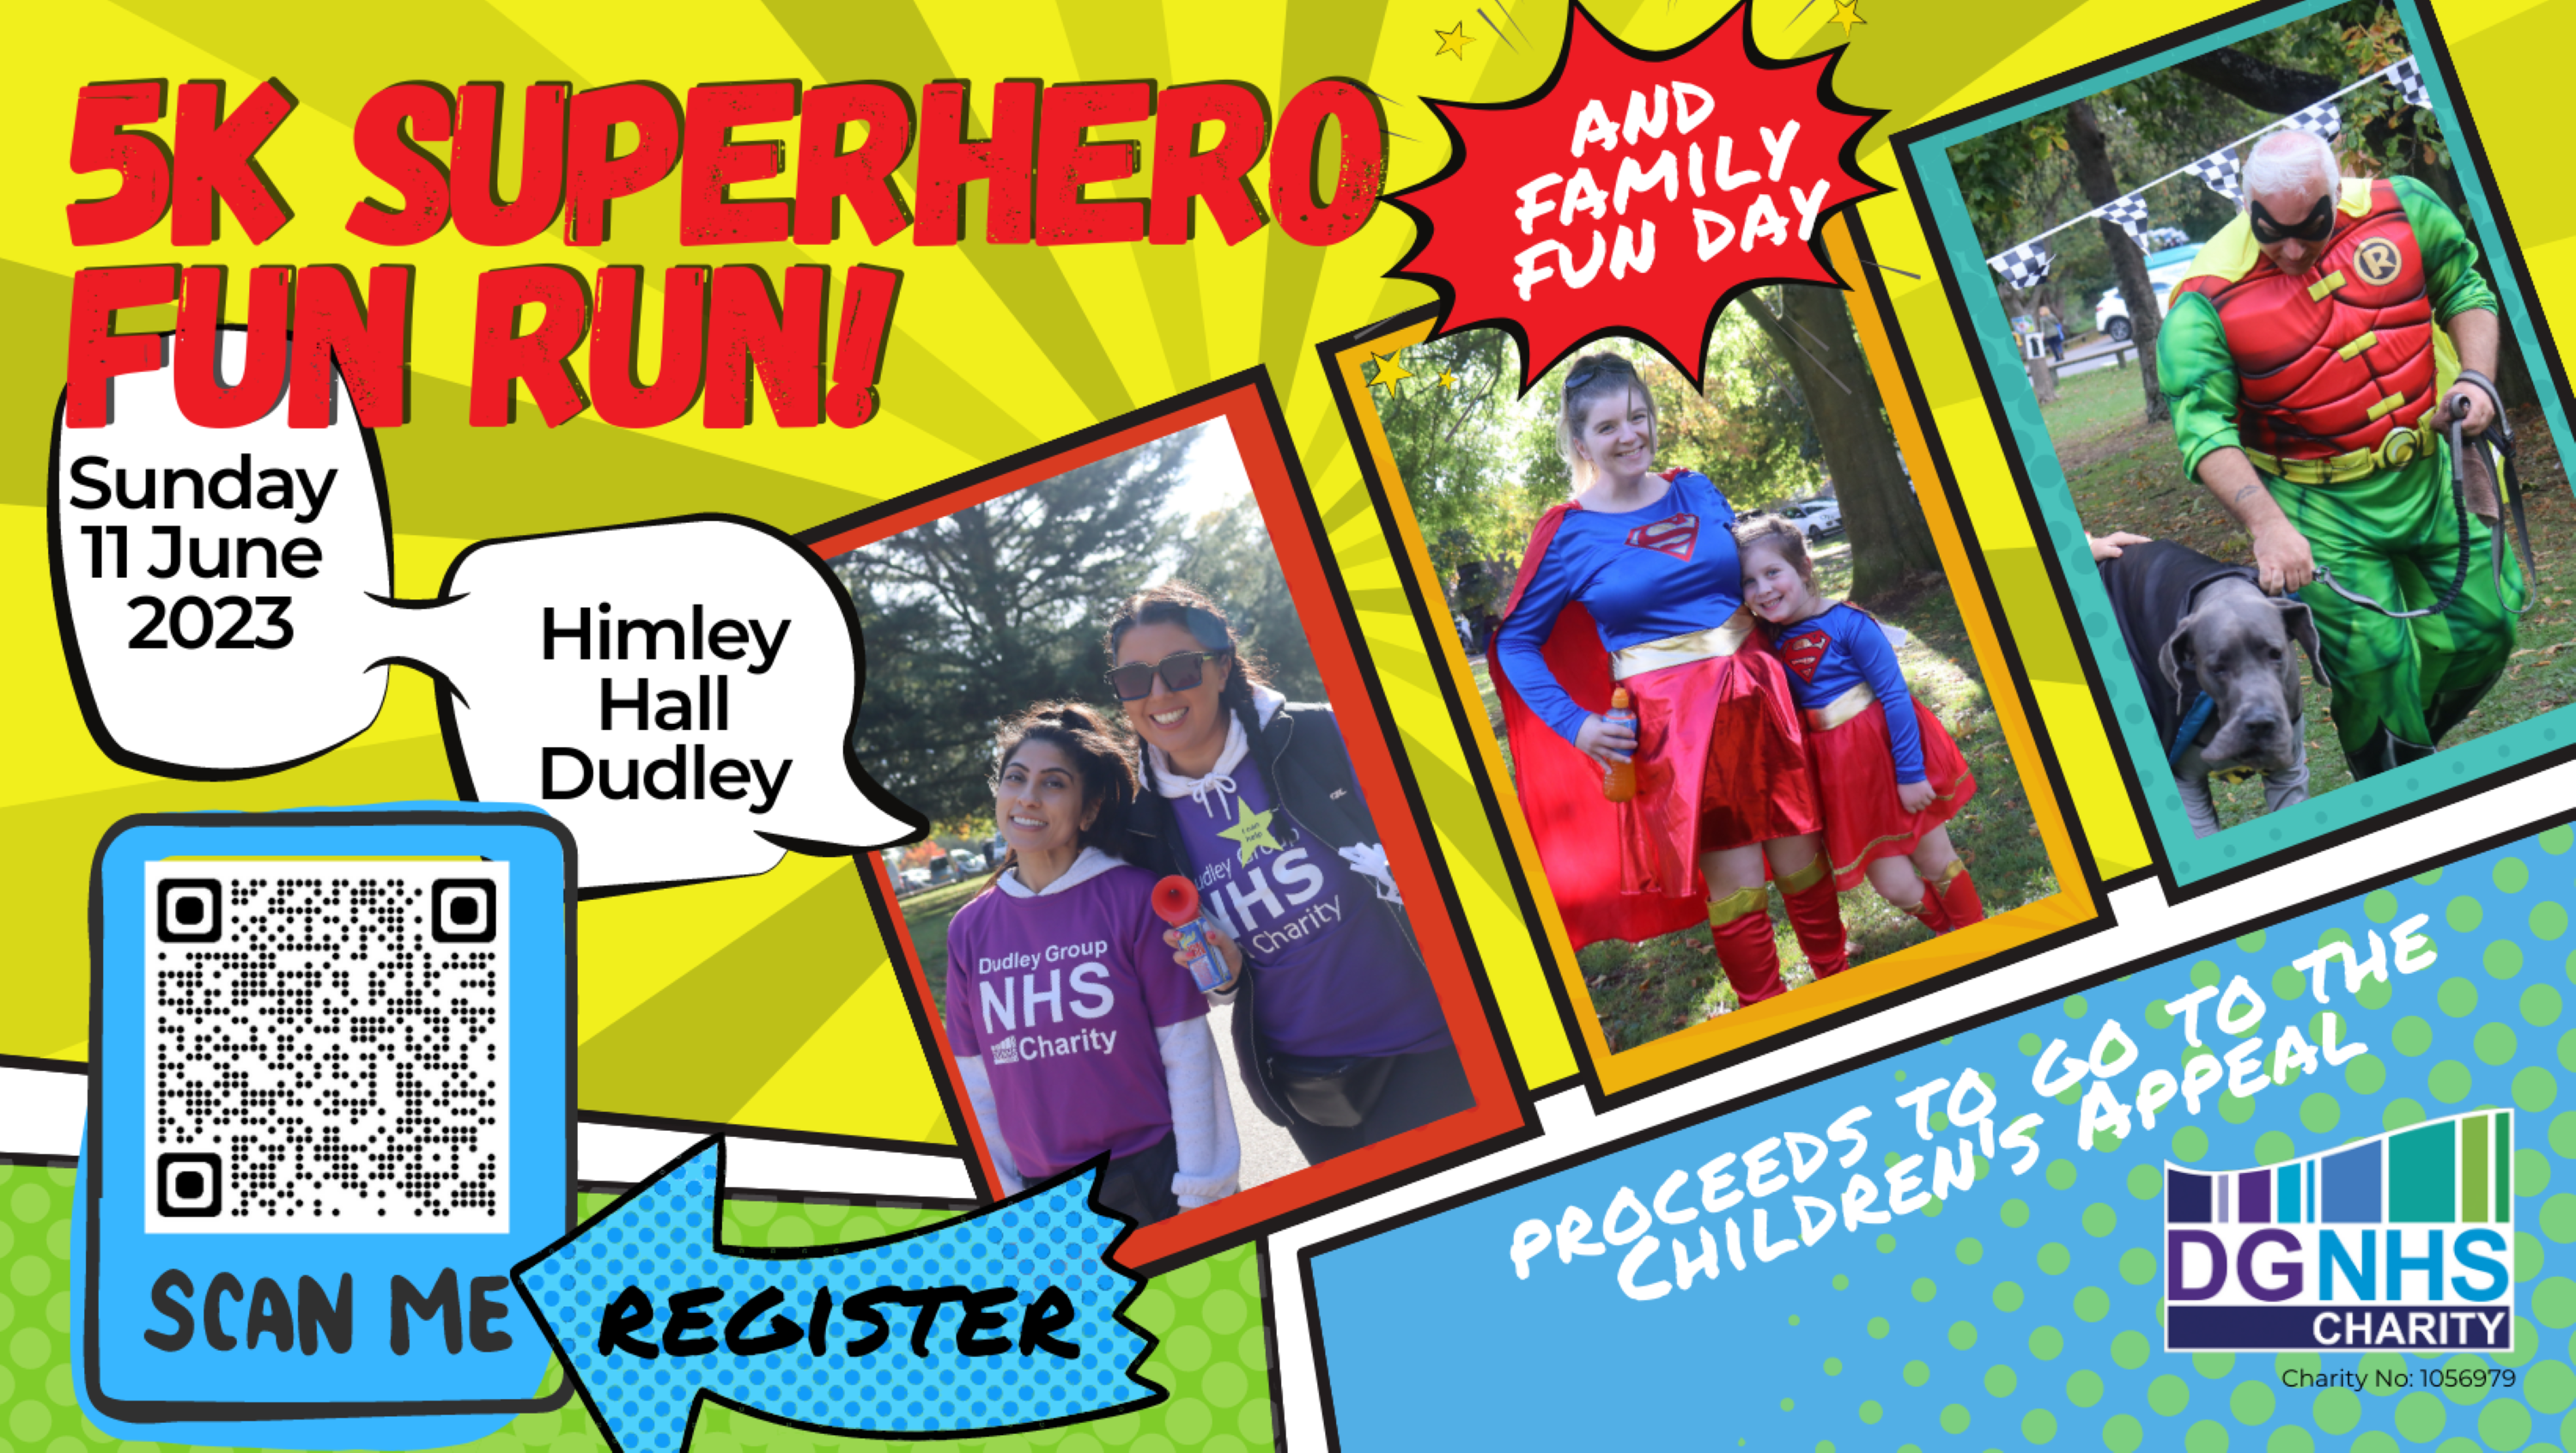 Image for Charity Superhero Fun Run and Family Fun Day at Himley